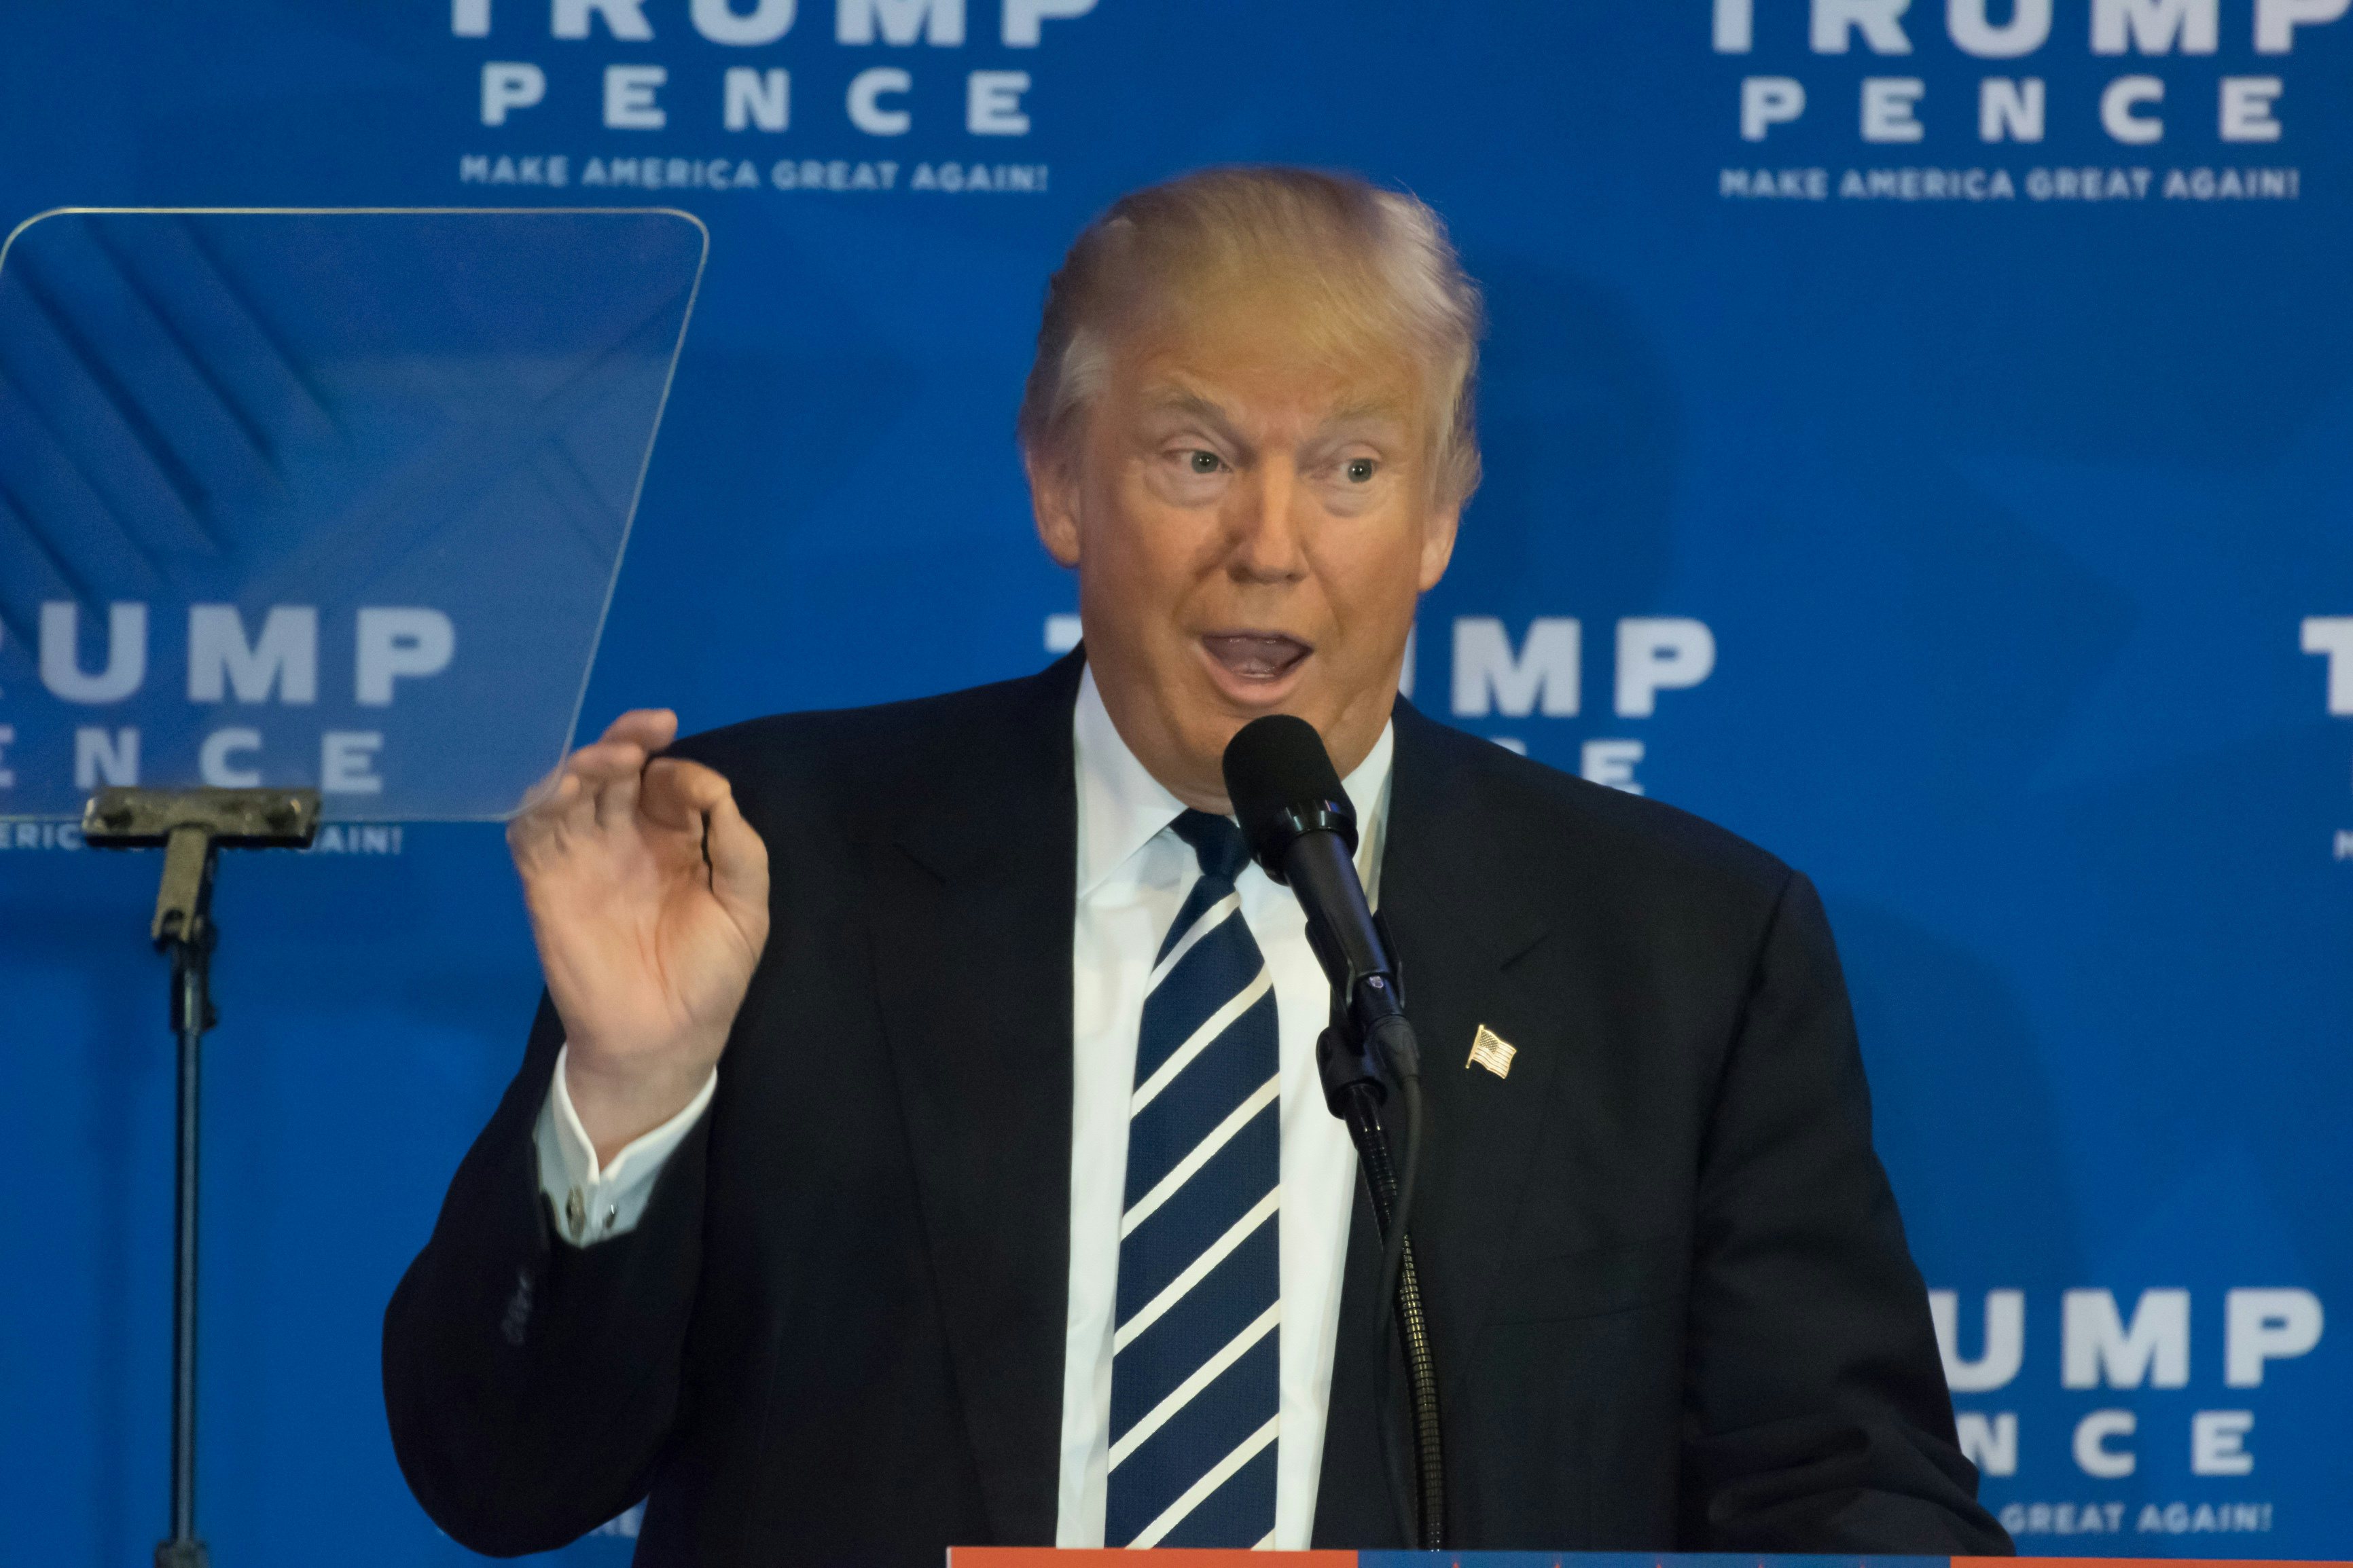 Donald Trump delivers a speech at a campaign event in Pennsylvania on November 1. (Shutterstock/Evan El-Amin)